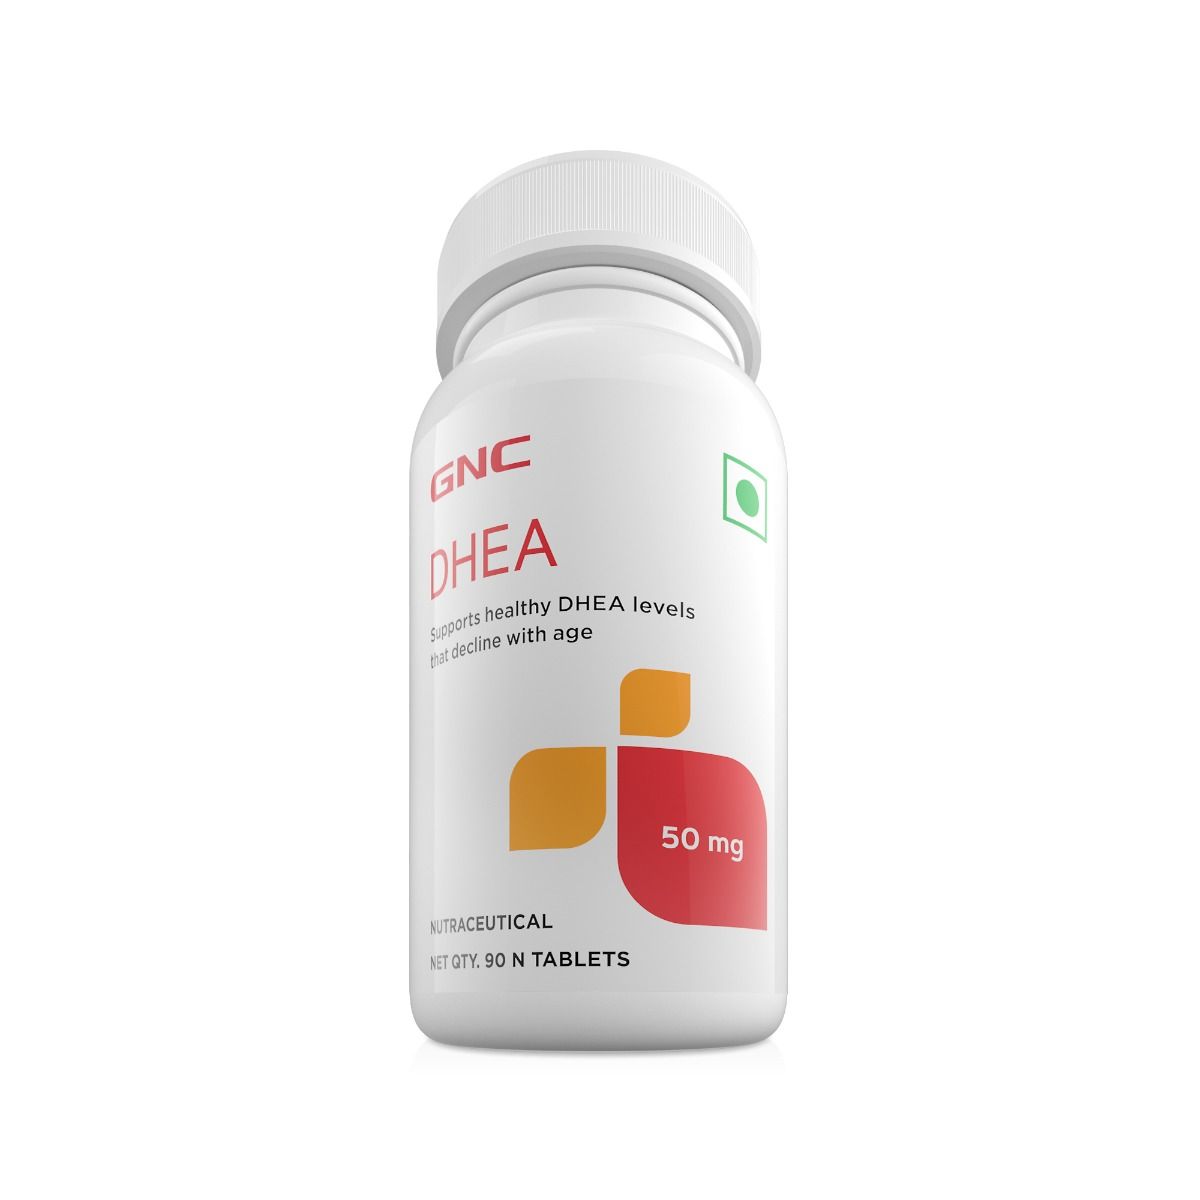 GNC DHEA Capsules - Maintains Healthy DHEA Levels